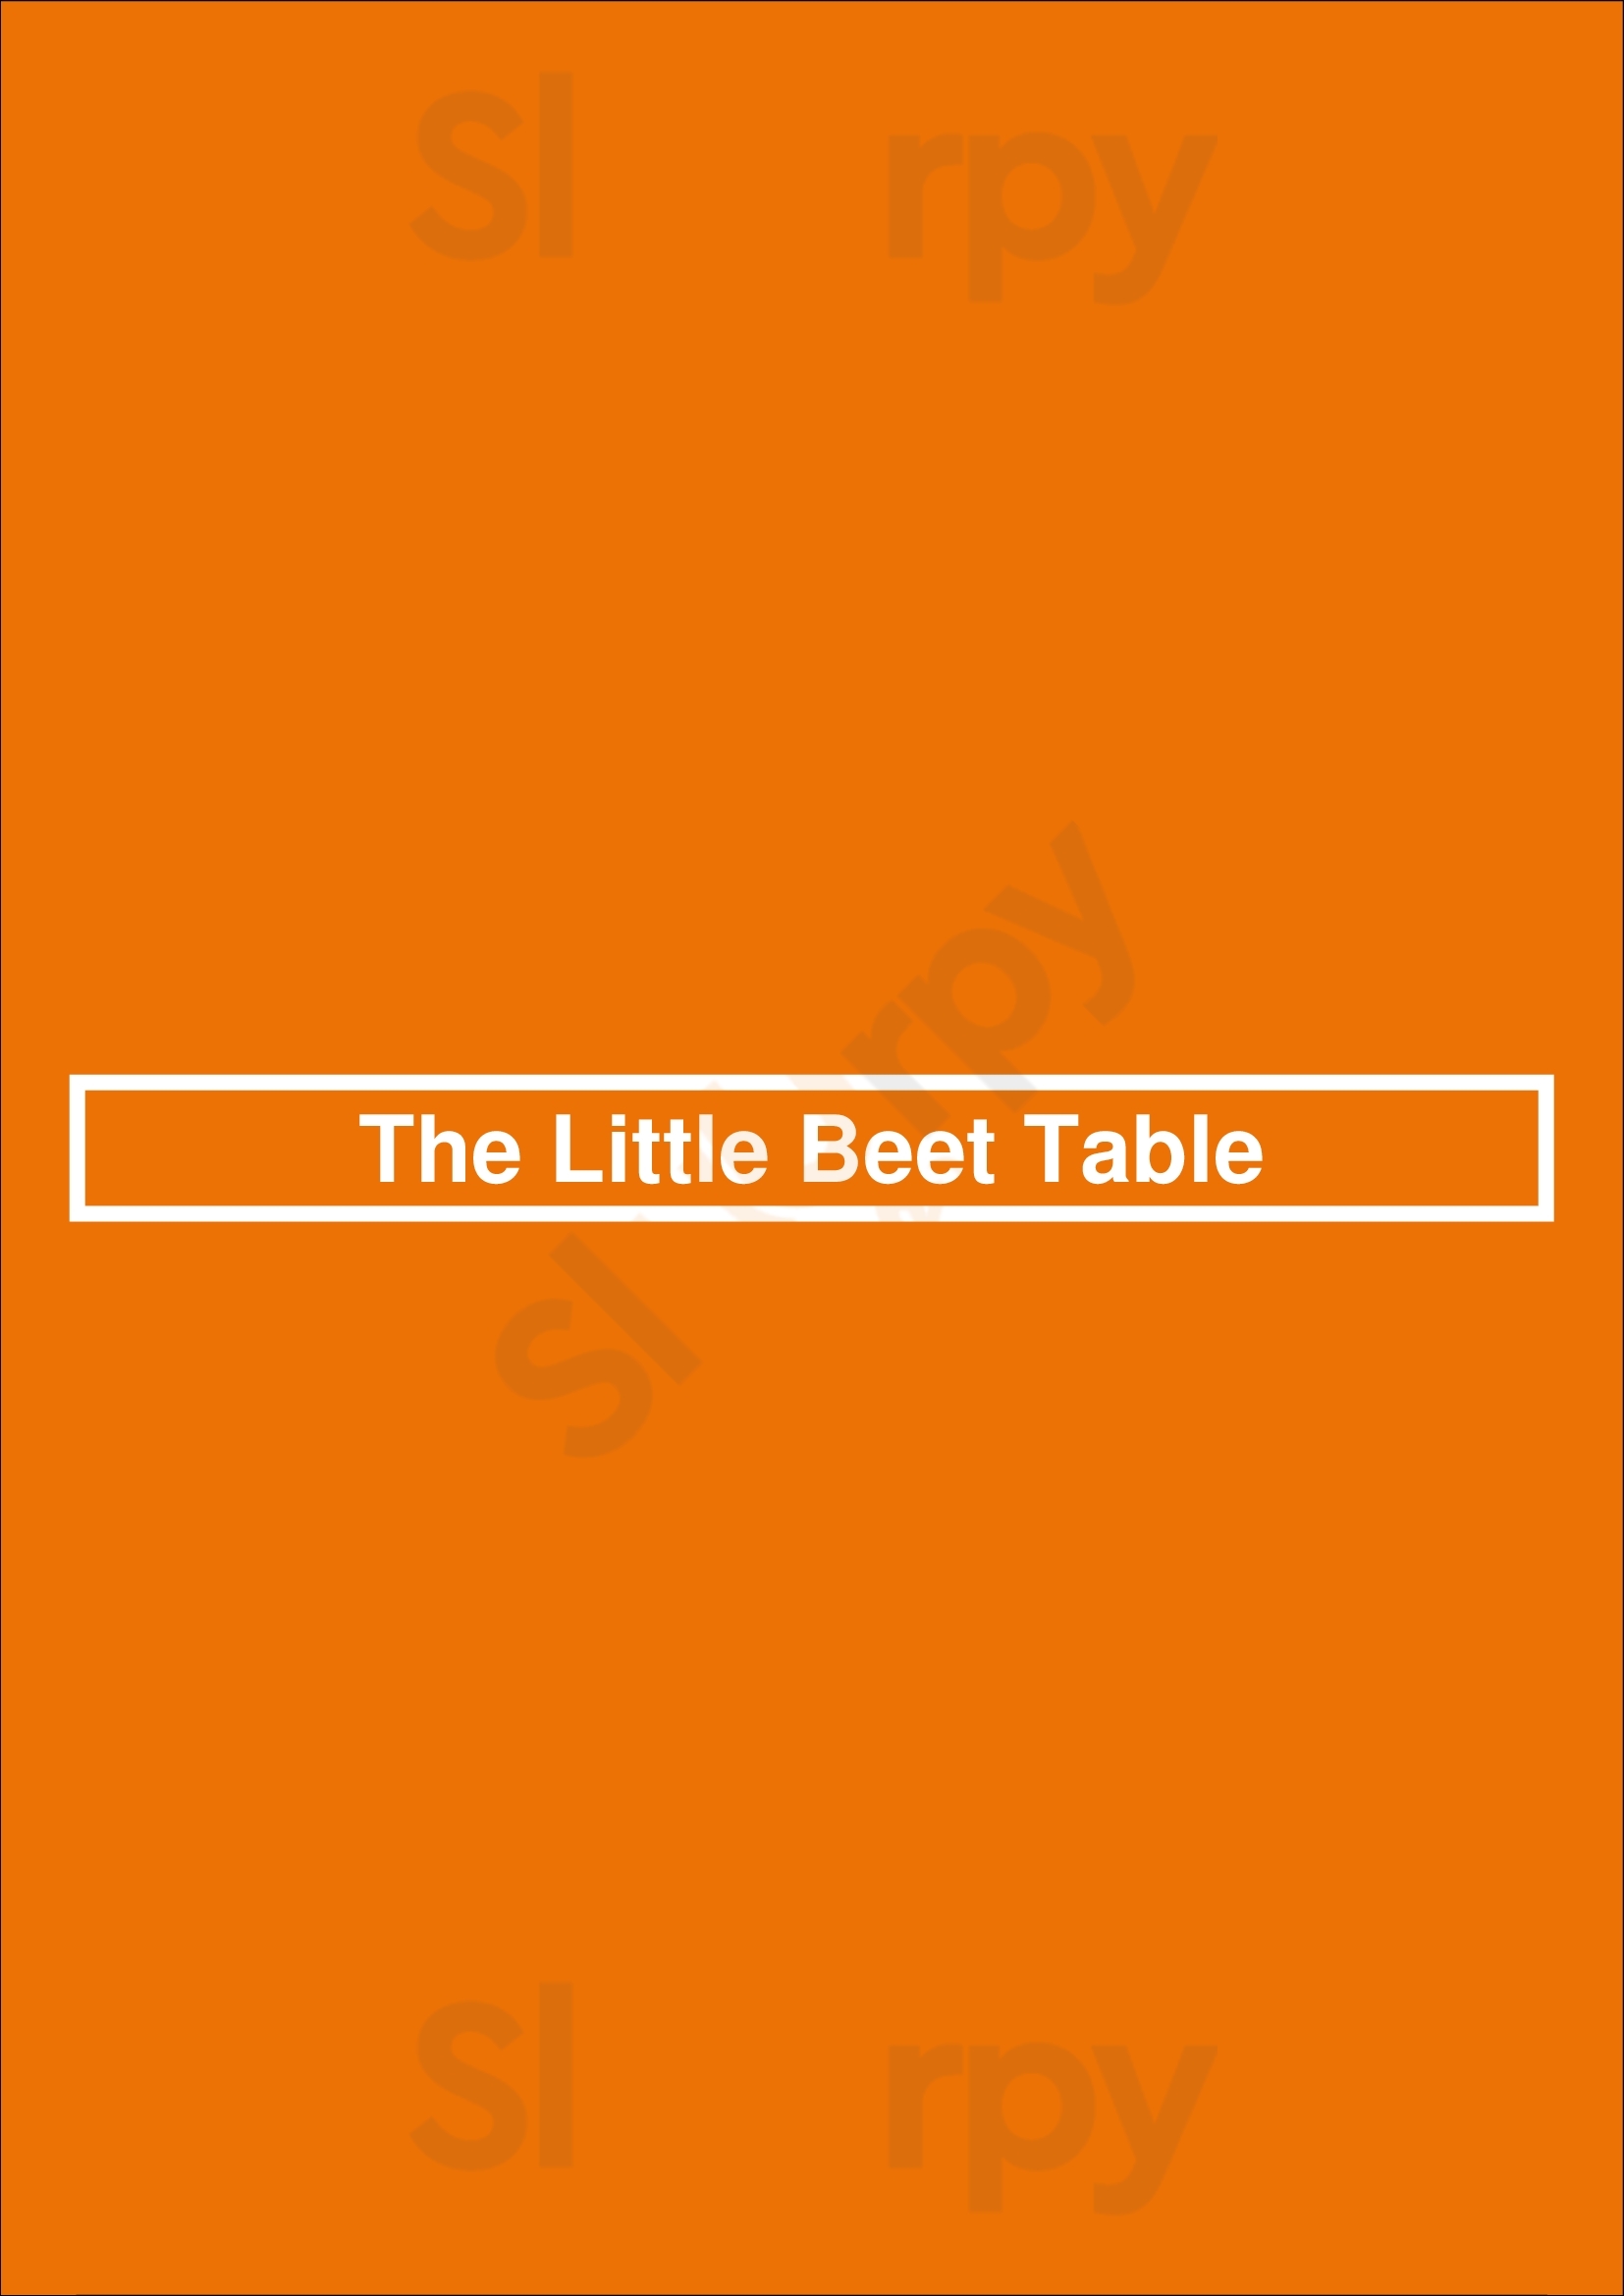 Little Beet Table New York City Menu - 1